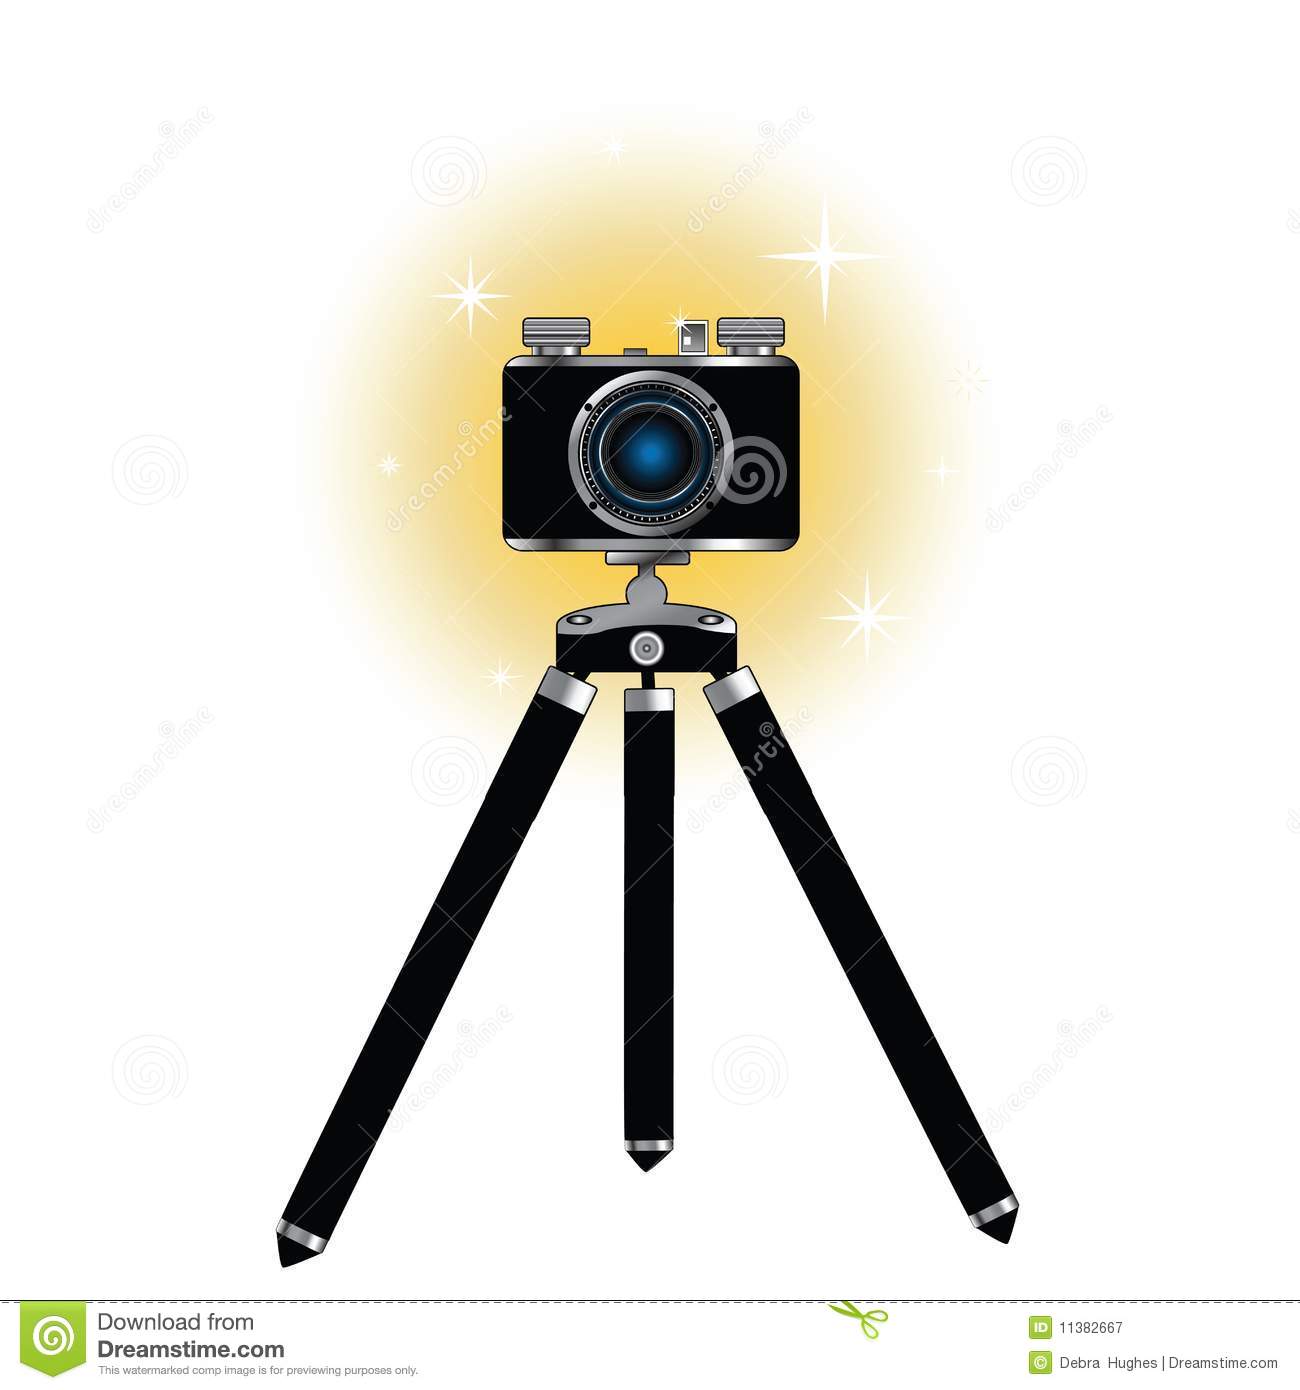 Video camera tripod.